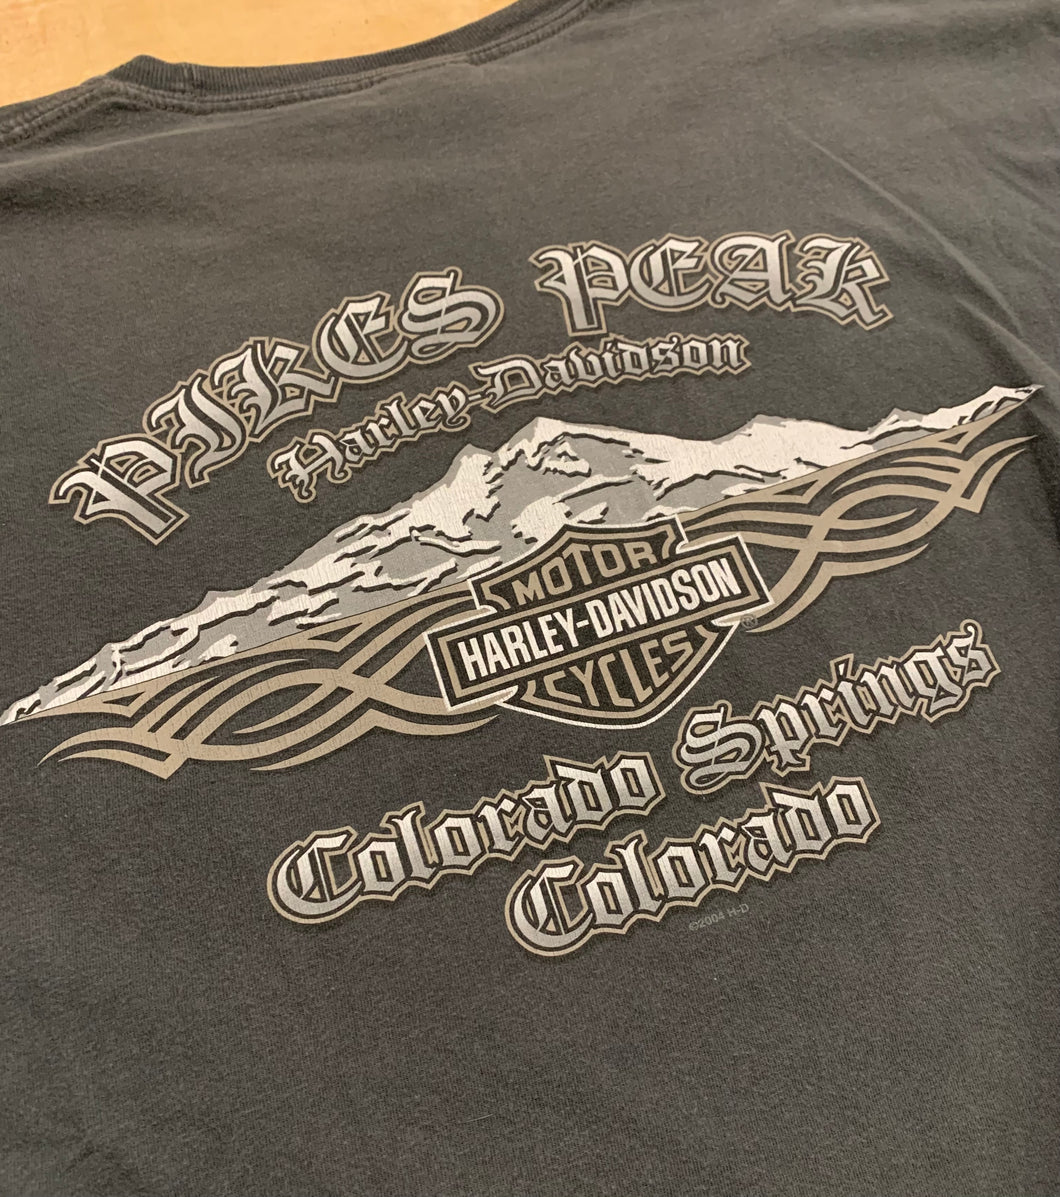 Harley Davidson 2004 Colorado Springs Pikes Peak T-Shirt